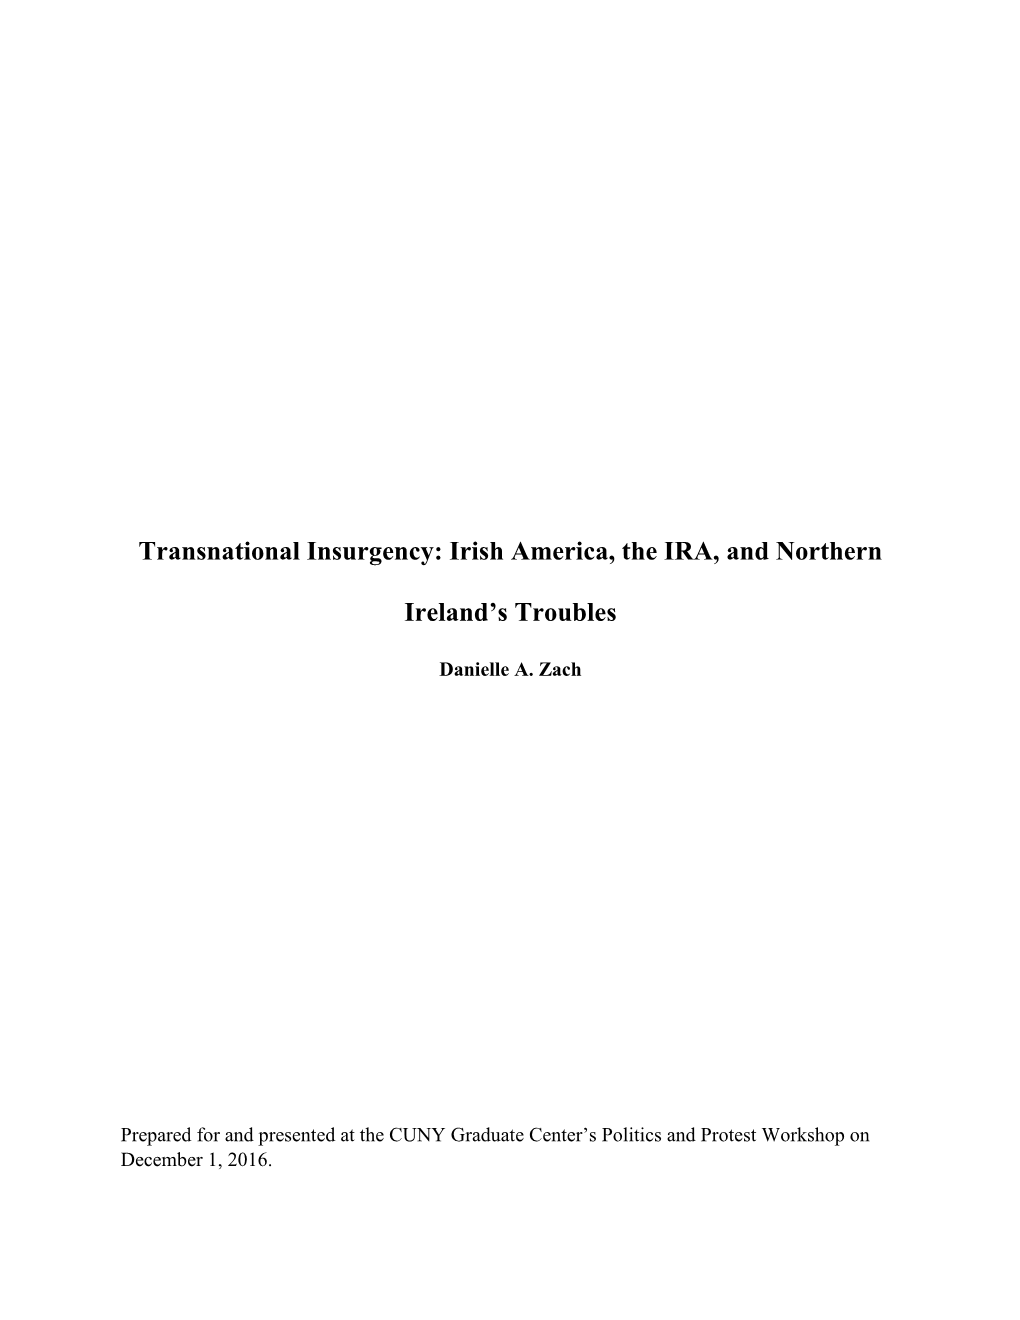 Transnational Insurgency: Irish America, the IRA, and Northern Ireland's Troubles